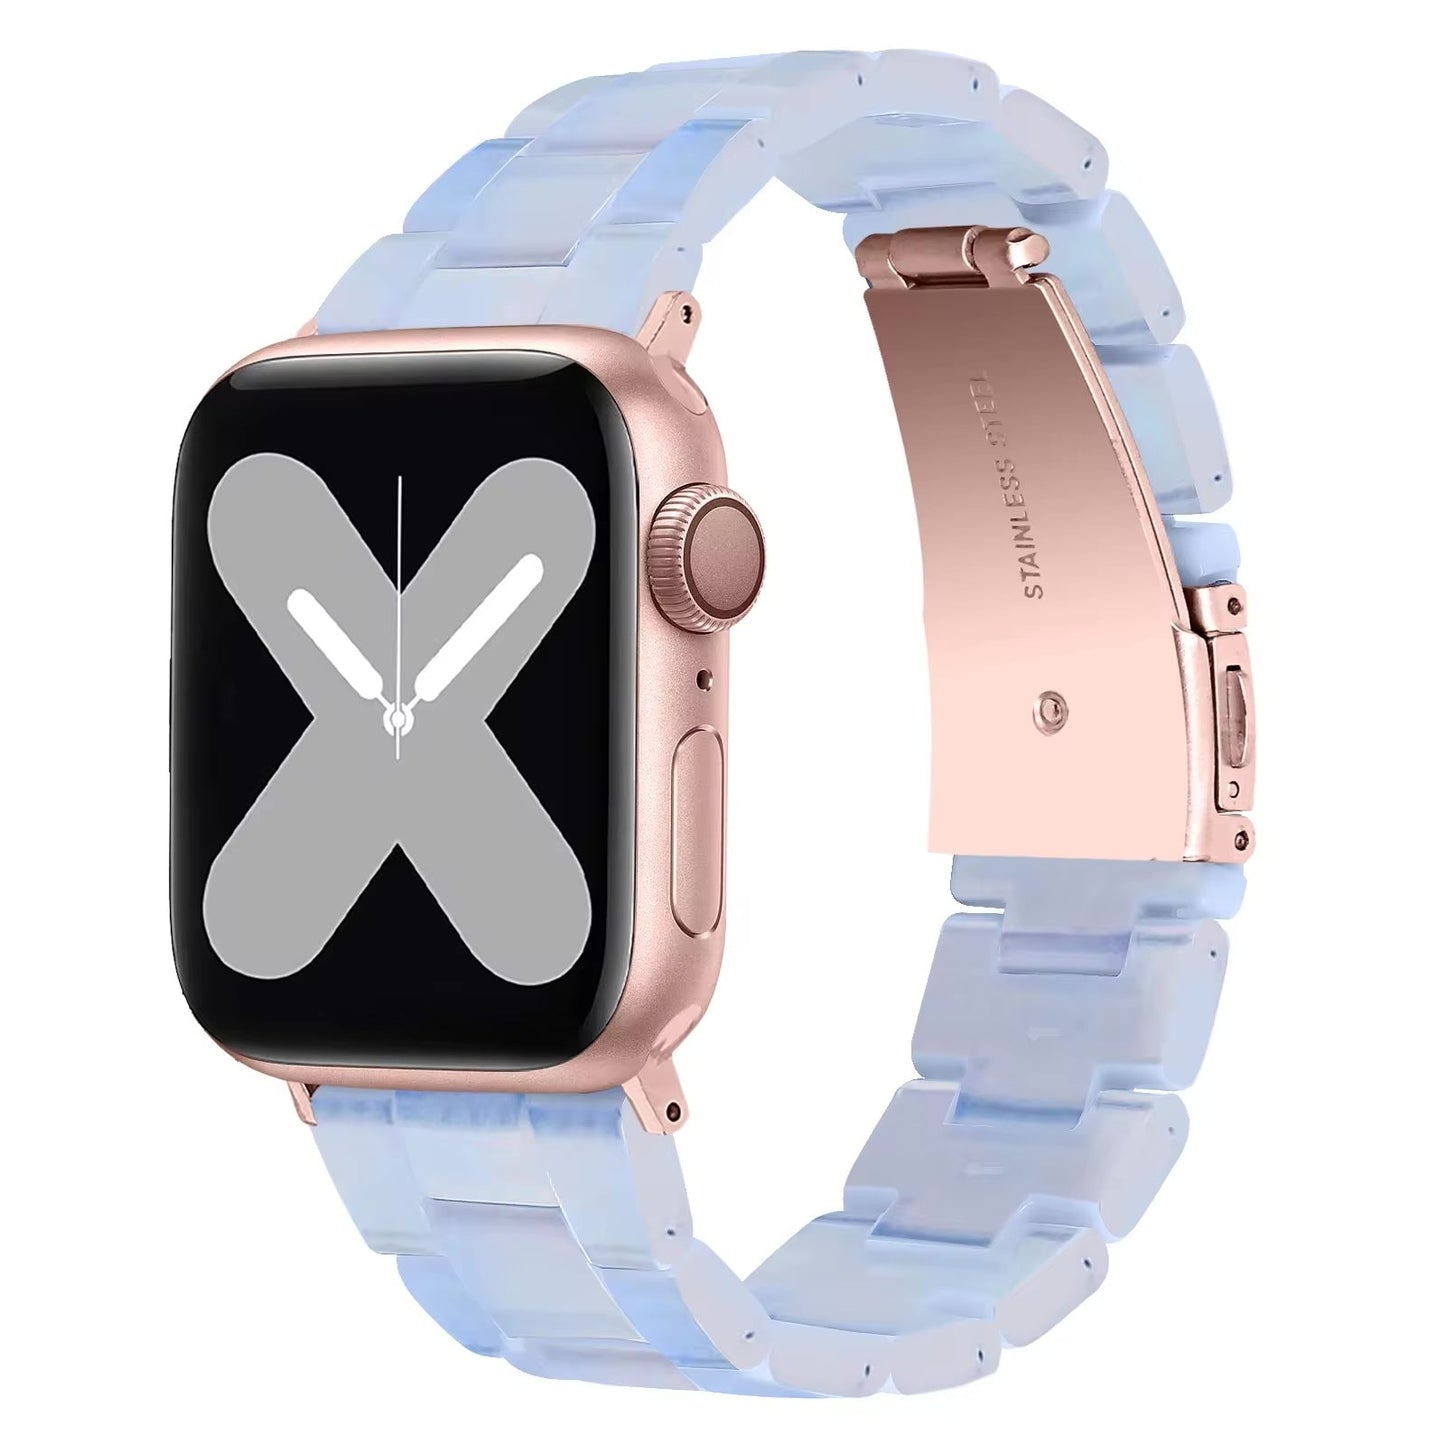 SpectraLux Resin Series for Apple Watch - Wrist Drip